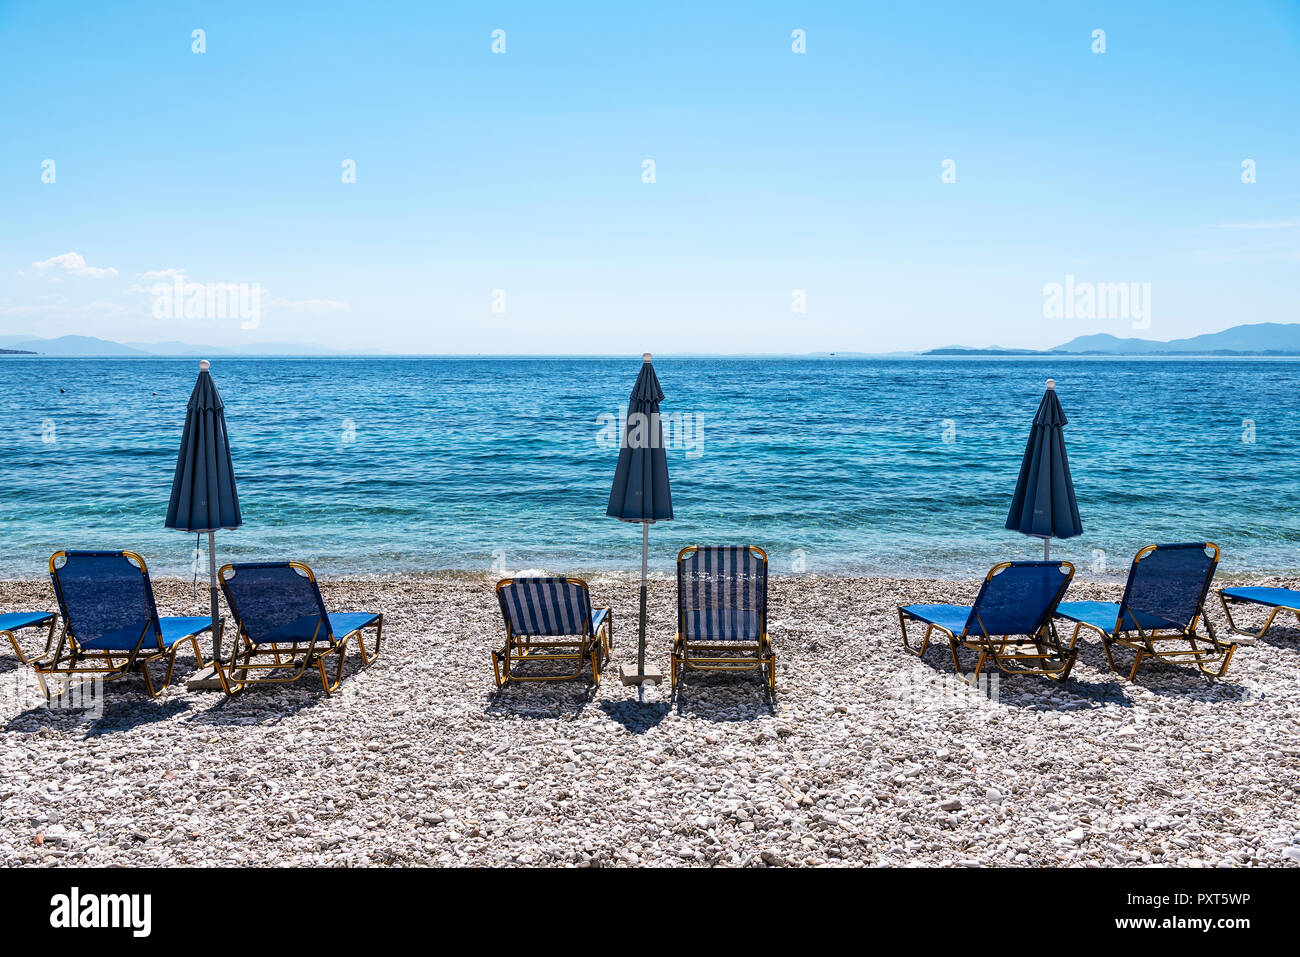 Deckchairs at Kaminaki Beach, Nissaki, Corfu Island, Ionian Islands, Mediterranean Sea, Greece Stock Photo